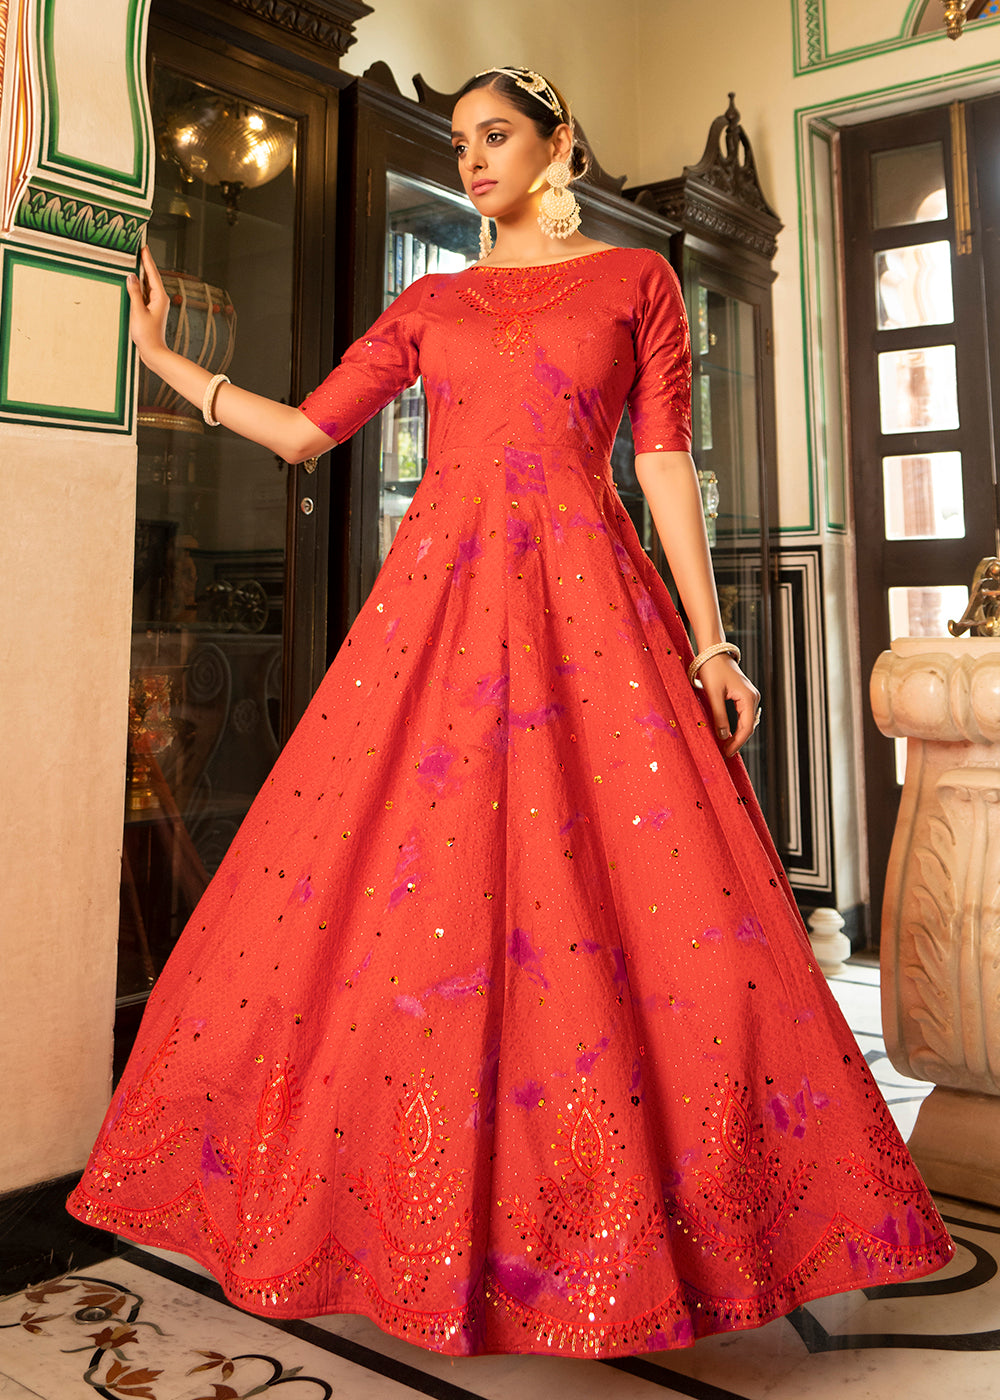 Indian Wedding Dresses: 18 Unusual Looks & Faqs | Red wedding dresses,  Indian wedding gowns, Indian bridal dress